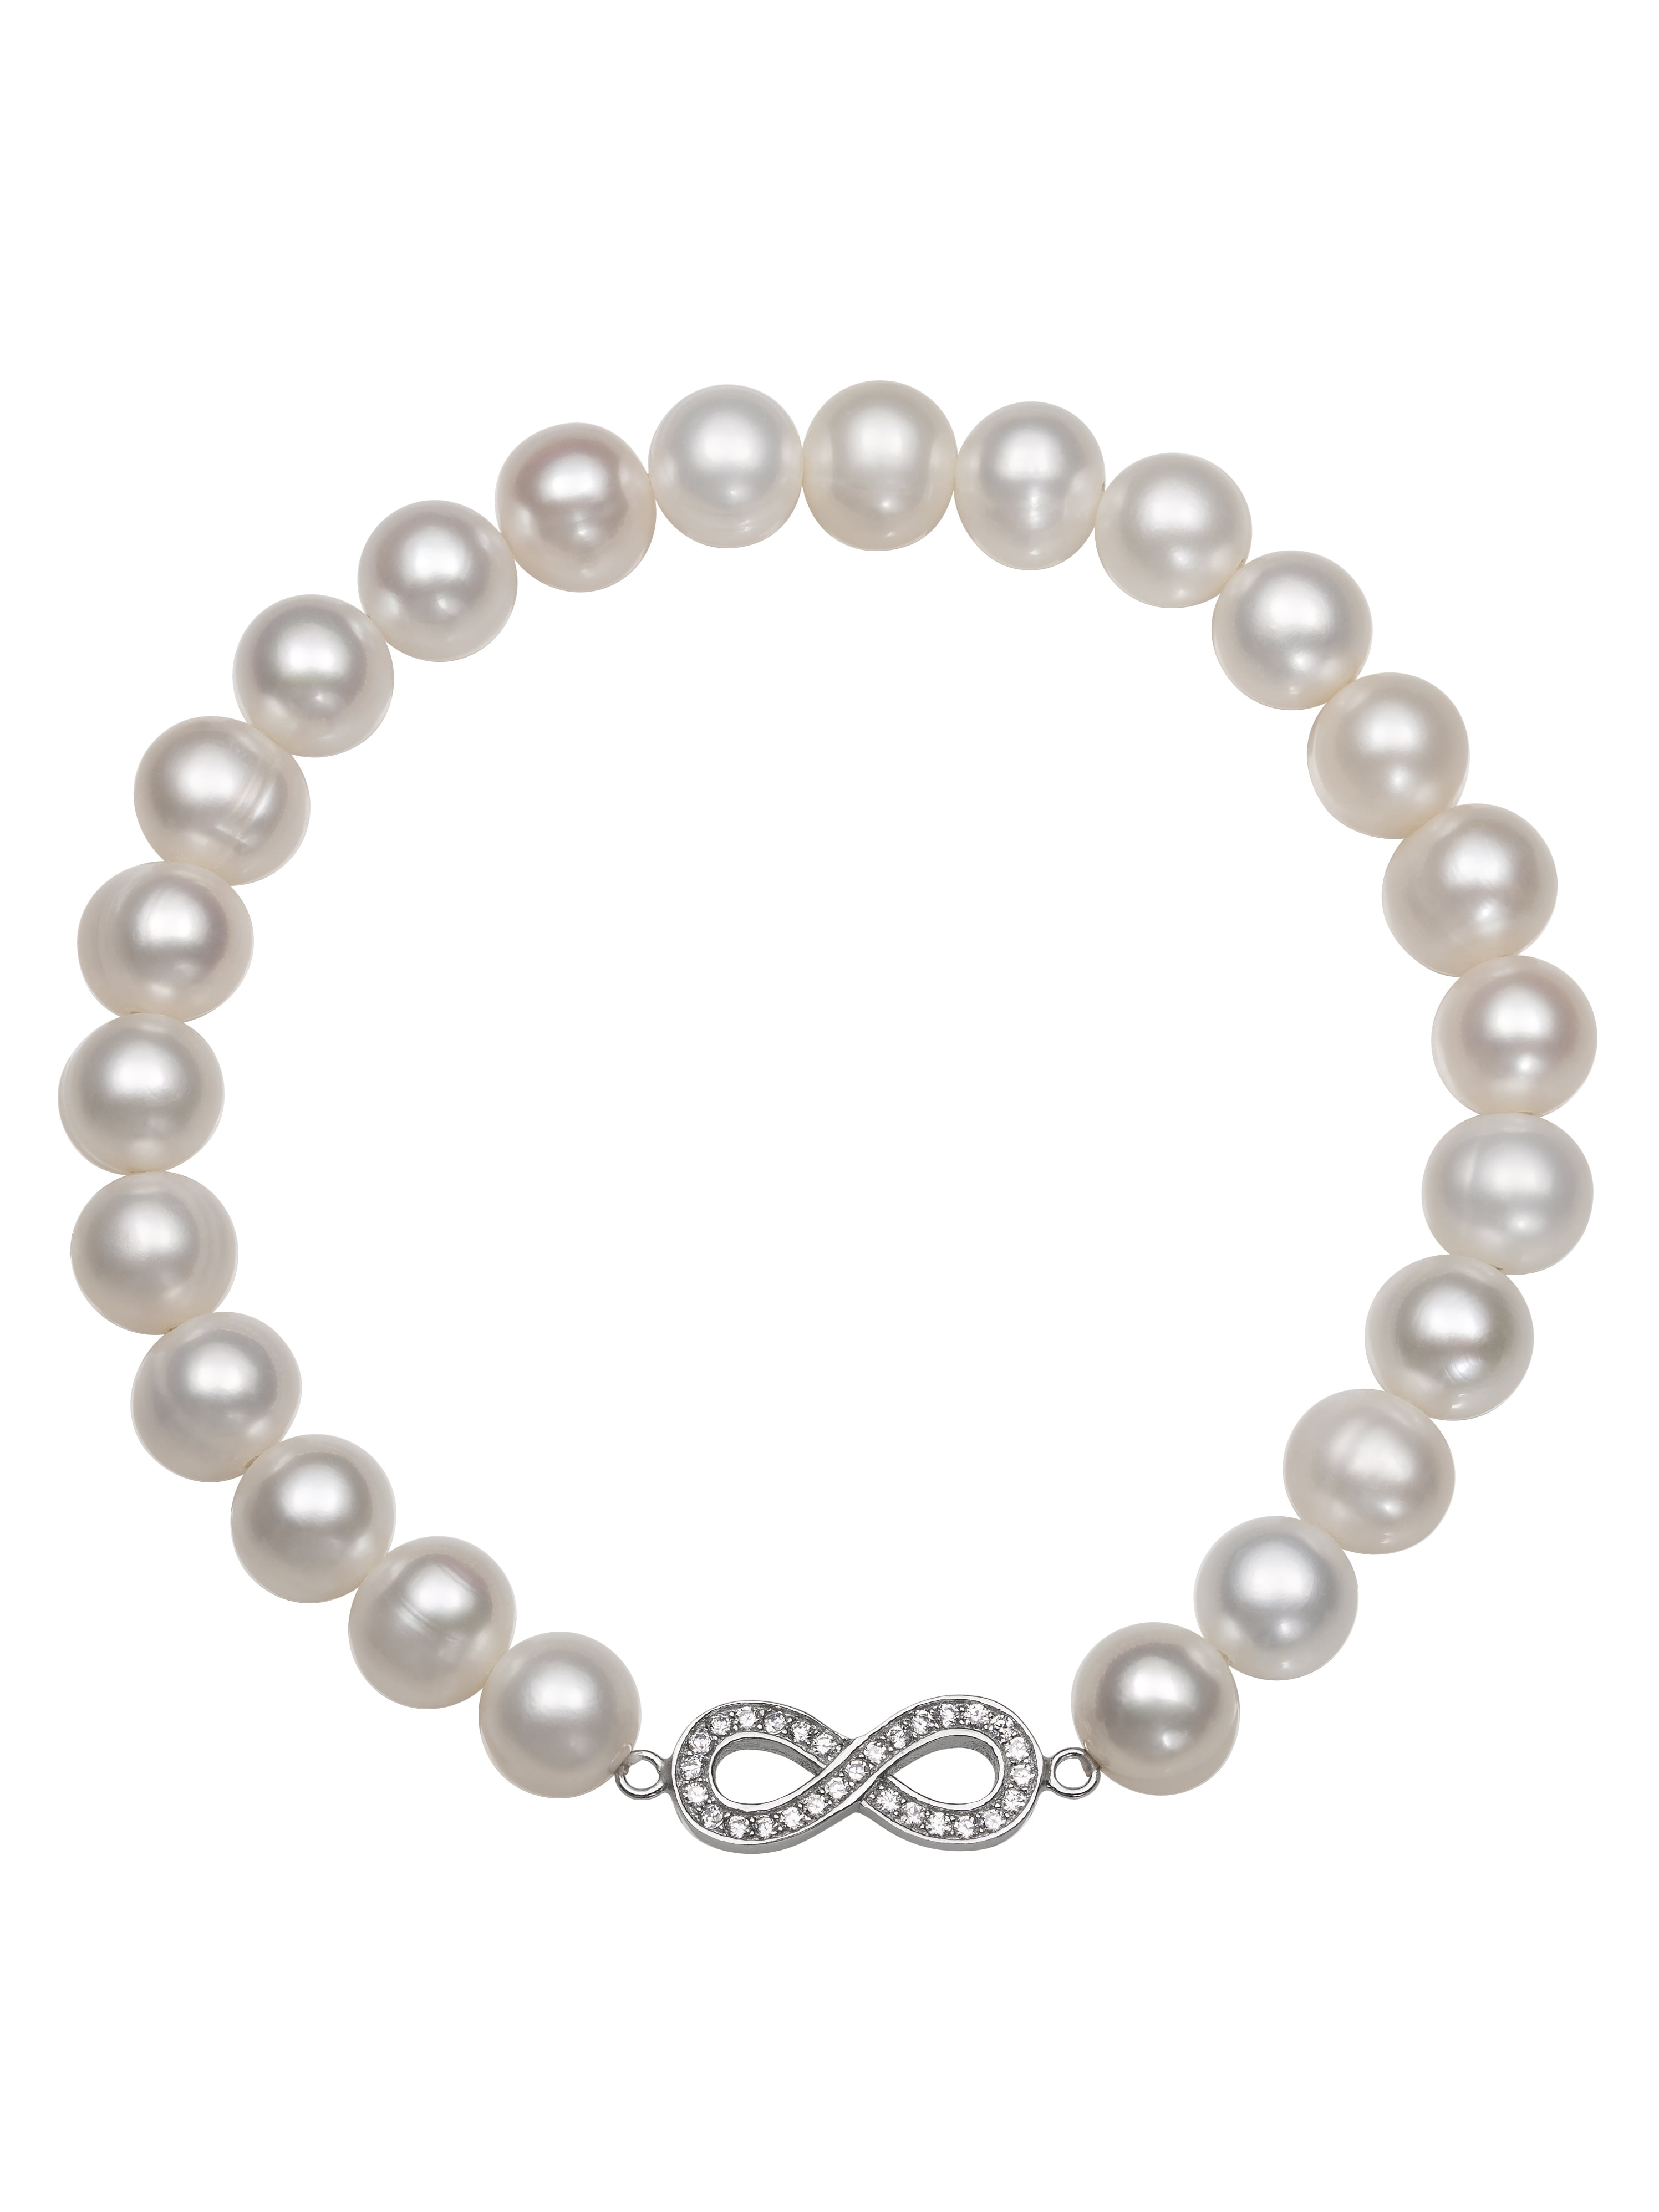 wedding minimalist bracelet freshwater pearl bracelet gift for her nugget pearl bracelet with sterling silver genuine pearl bracelet